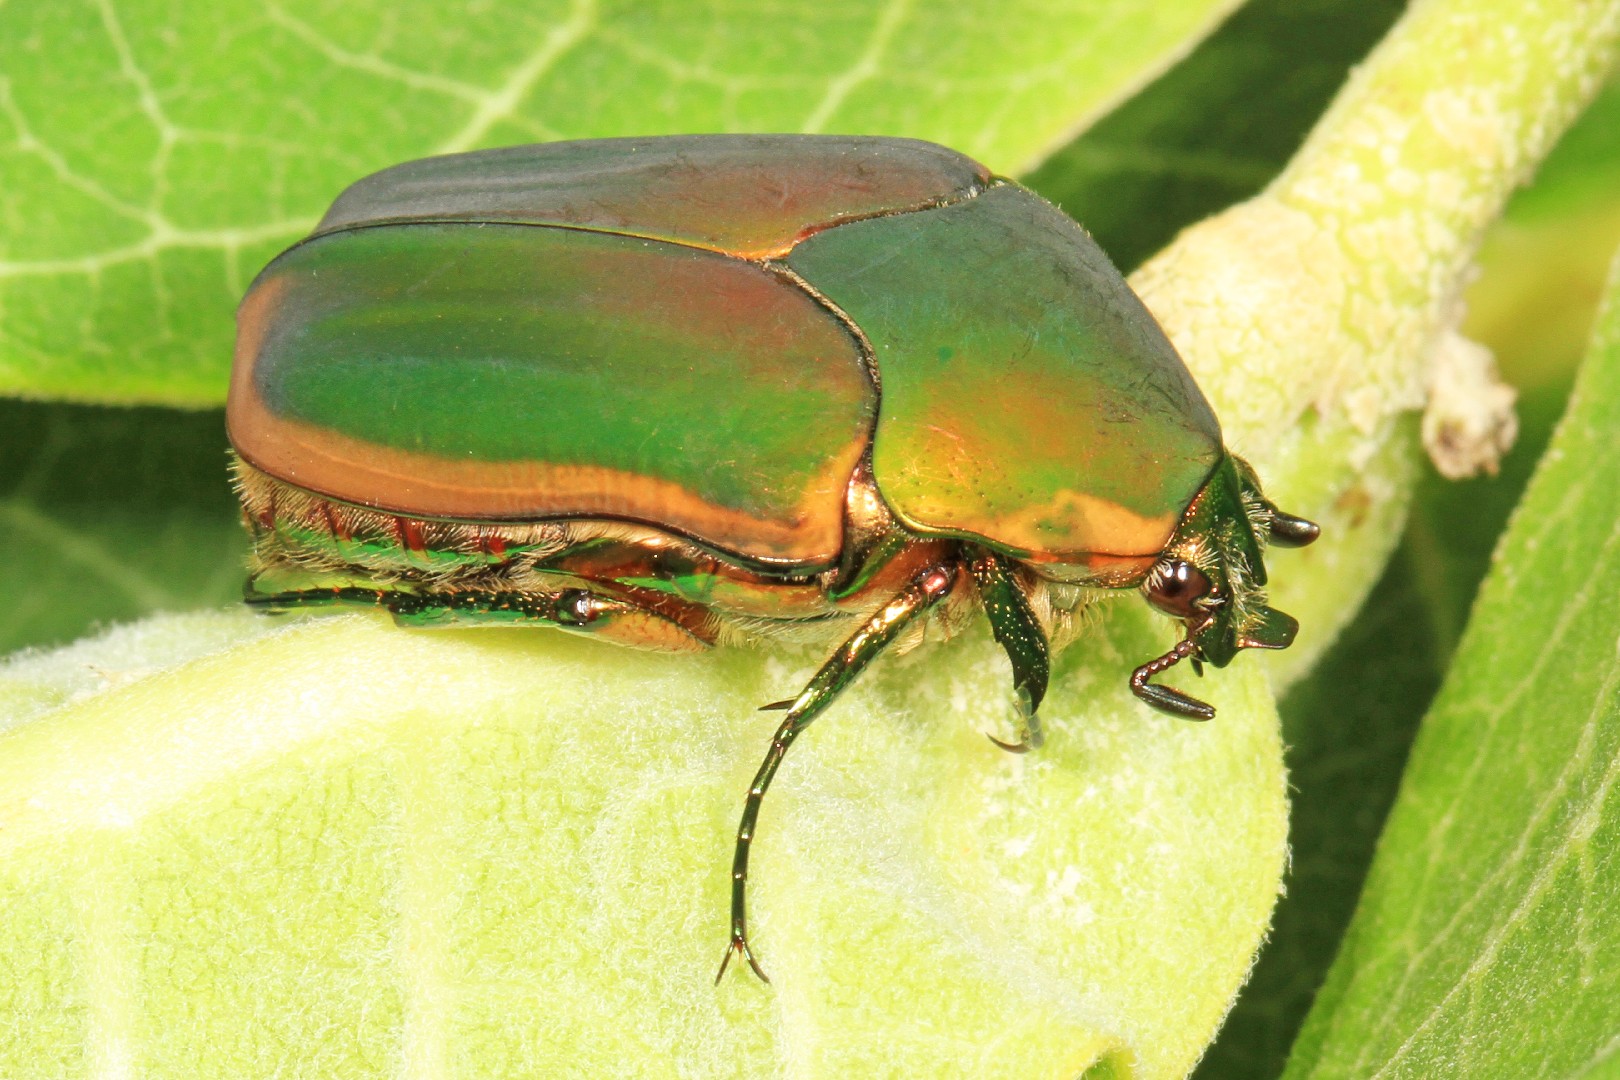 Green june beetles (Cotinis)